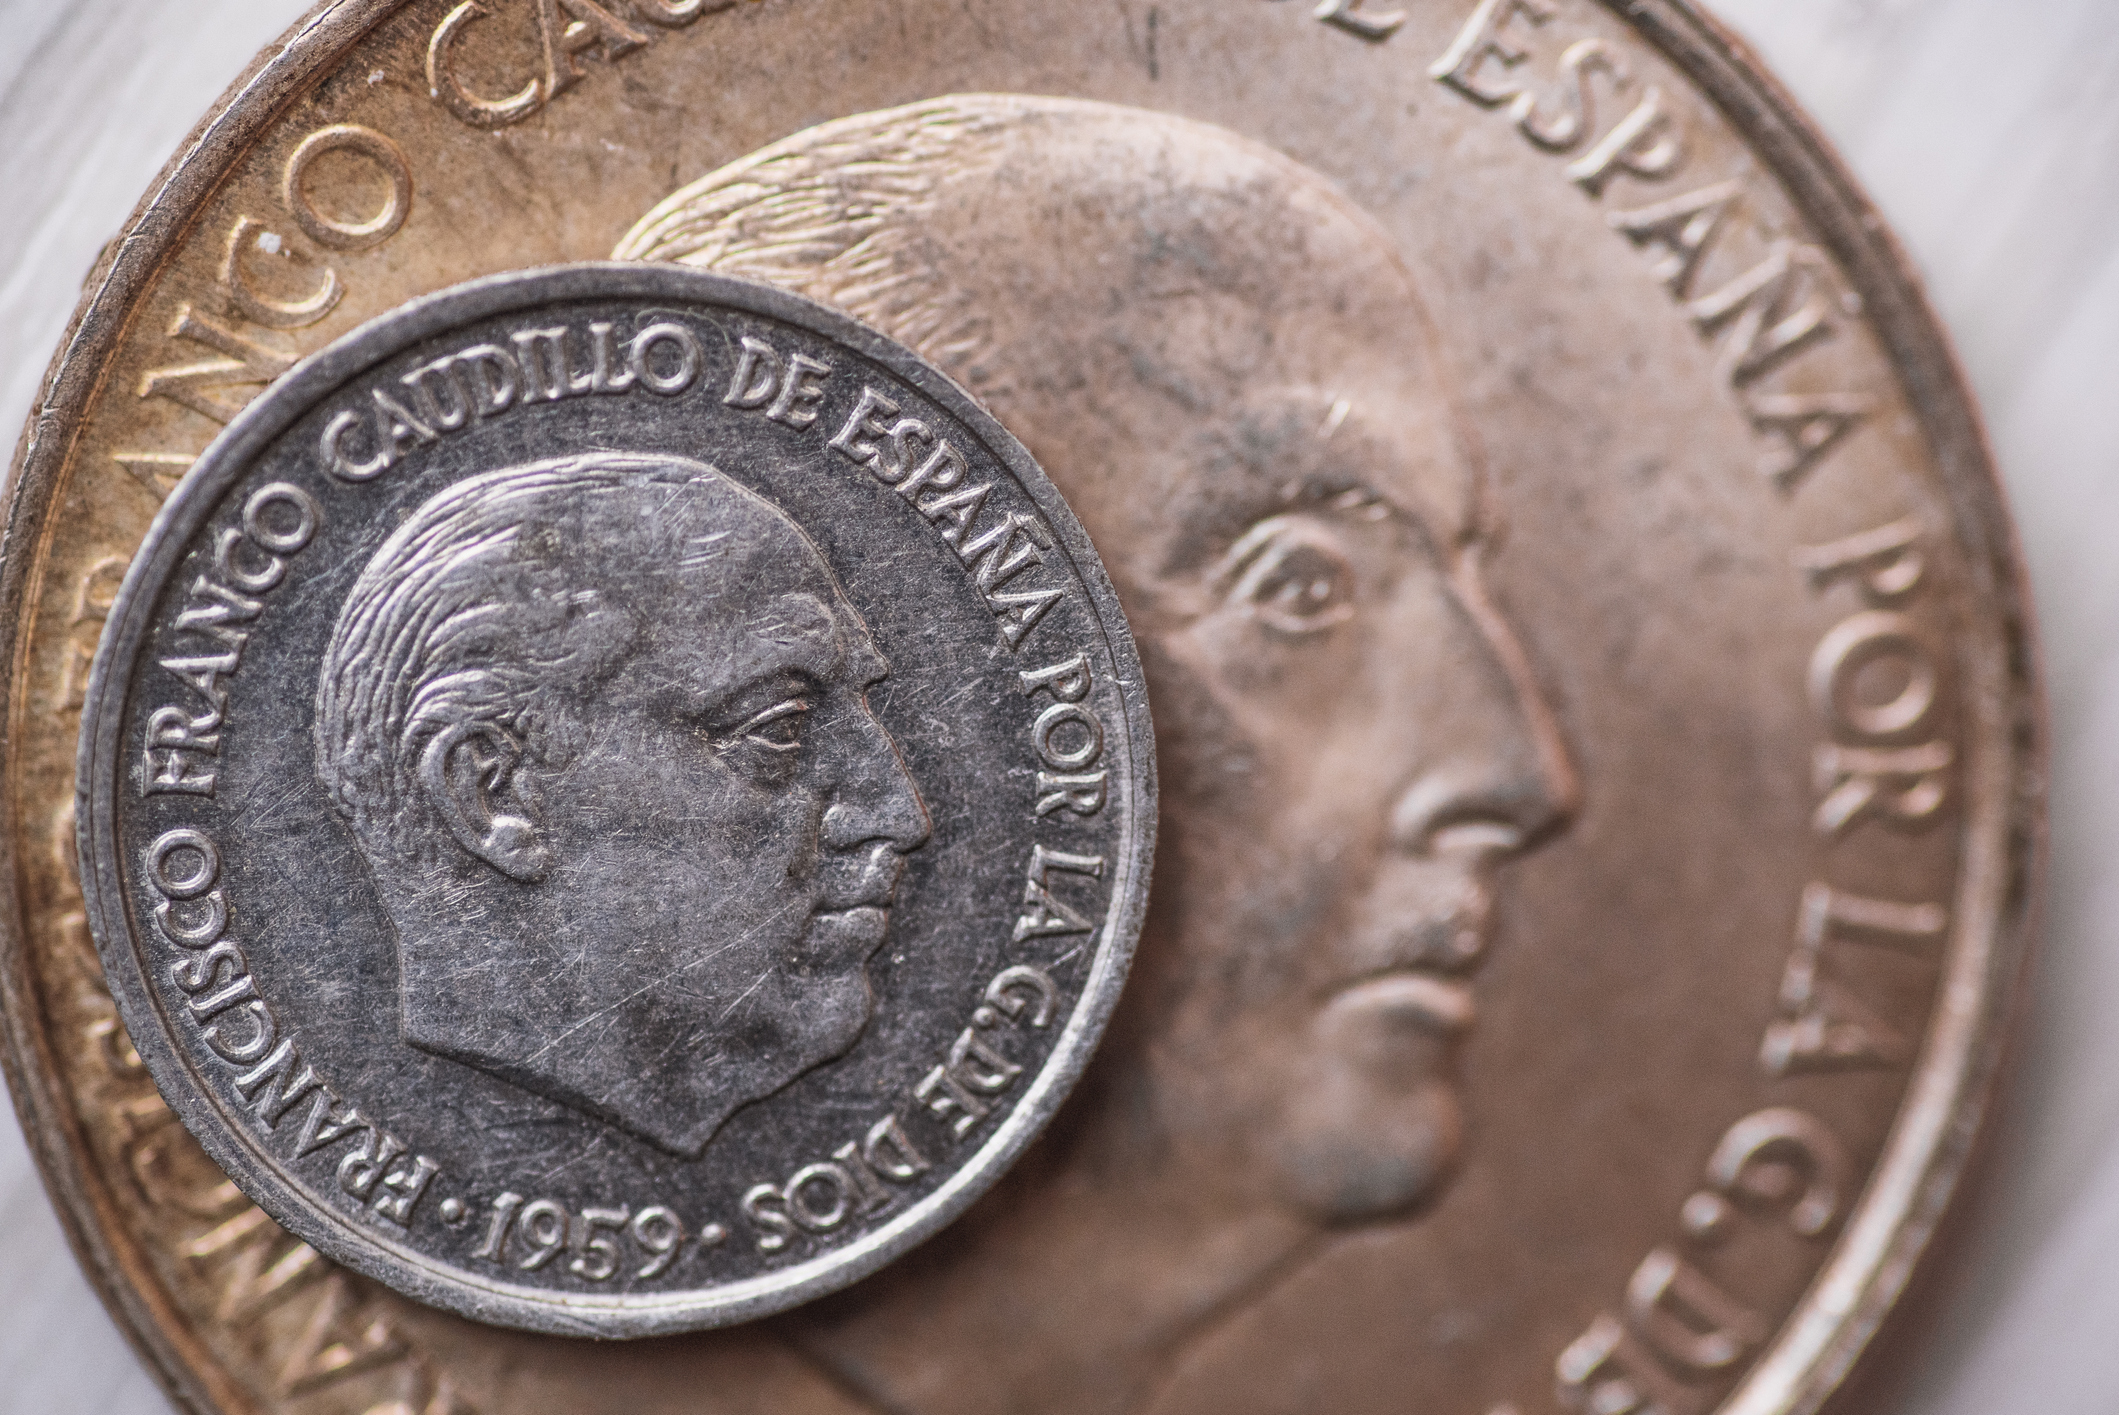 Cumplir pubertad enemigo Esta moneda de 1 peseta "muy rara" puede hacerte ganar 6.500 euros |  Business Insider España